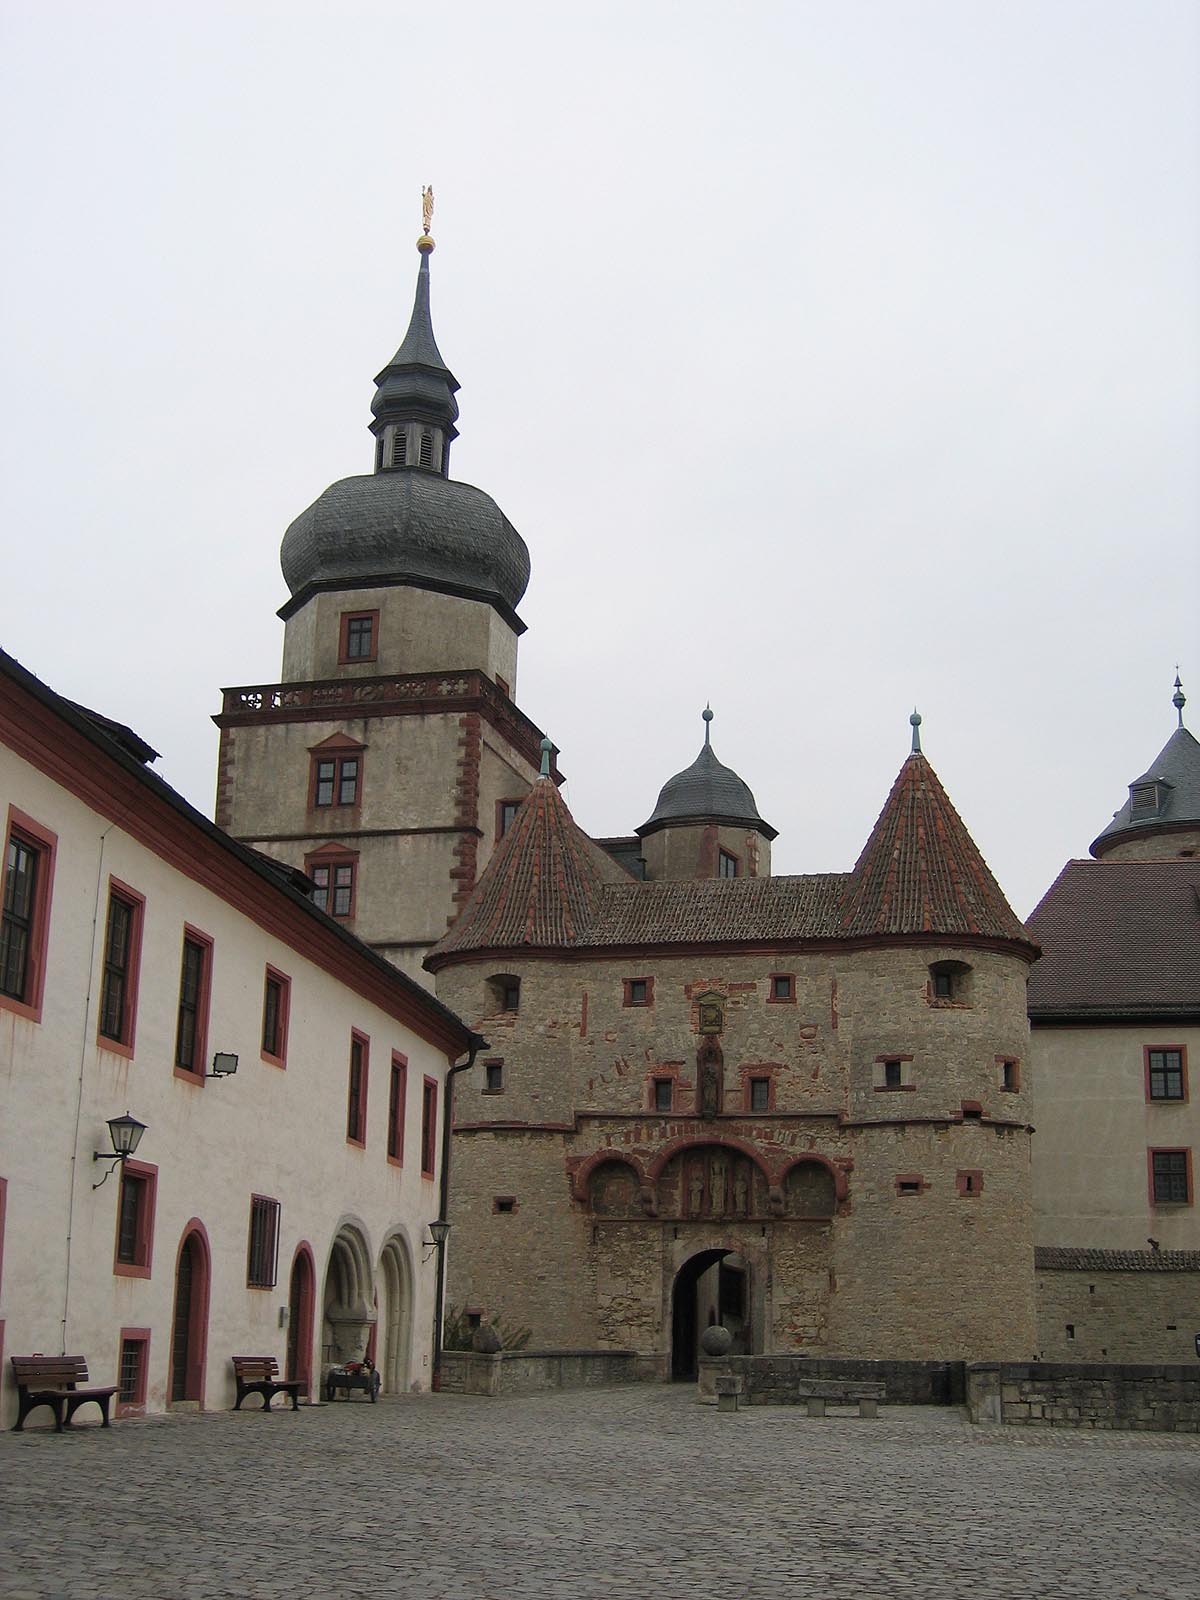 Fortress Marienberg, Würzburg